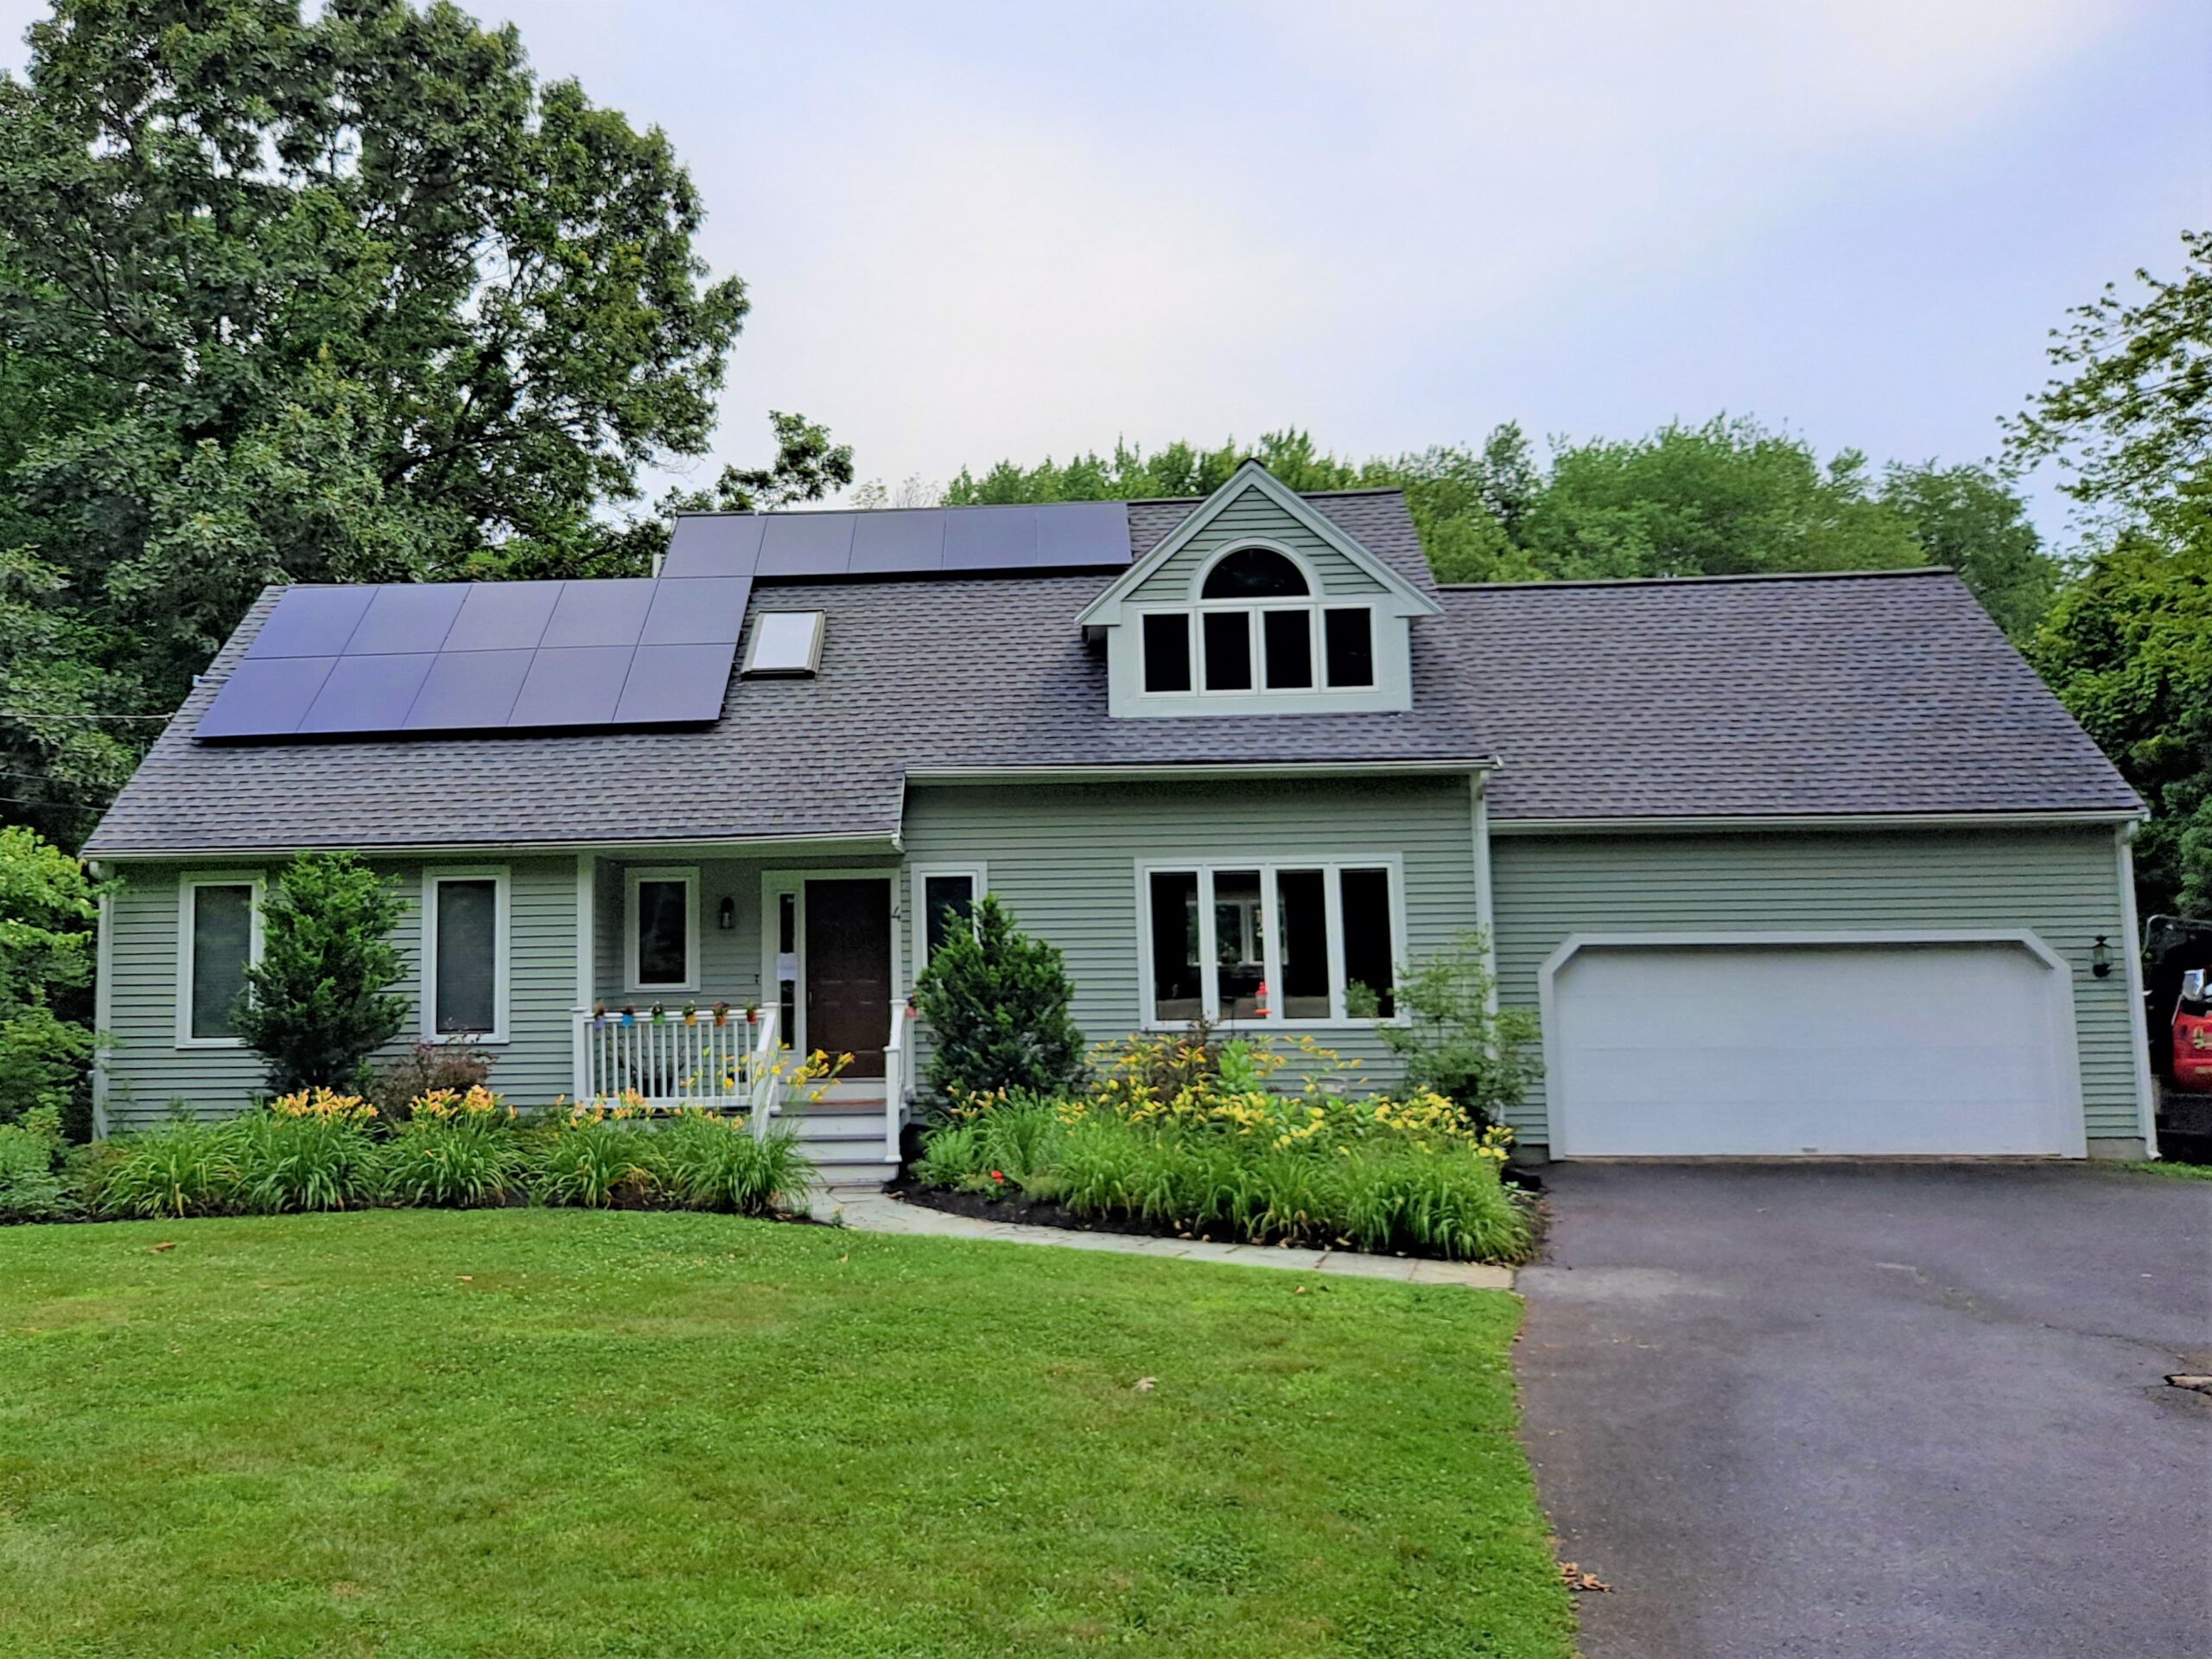 Southborough MA Solar House scaled